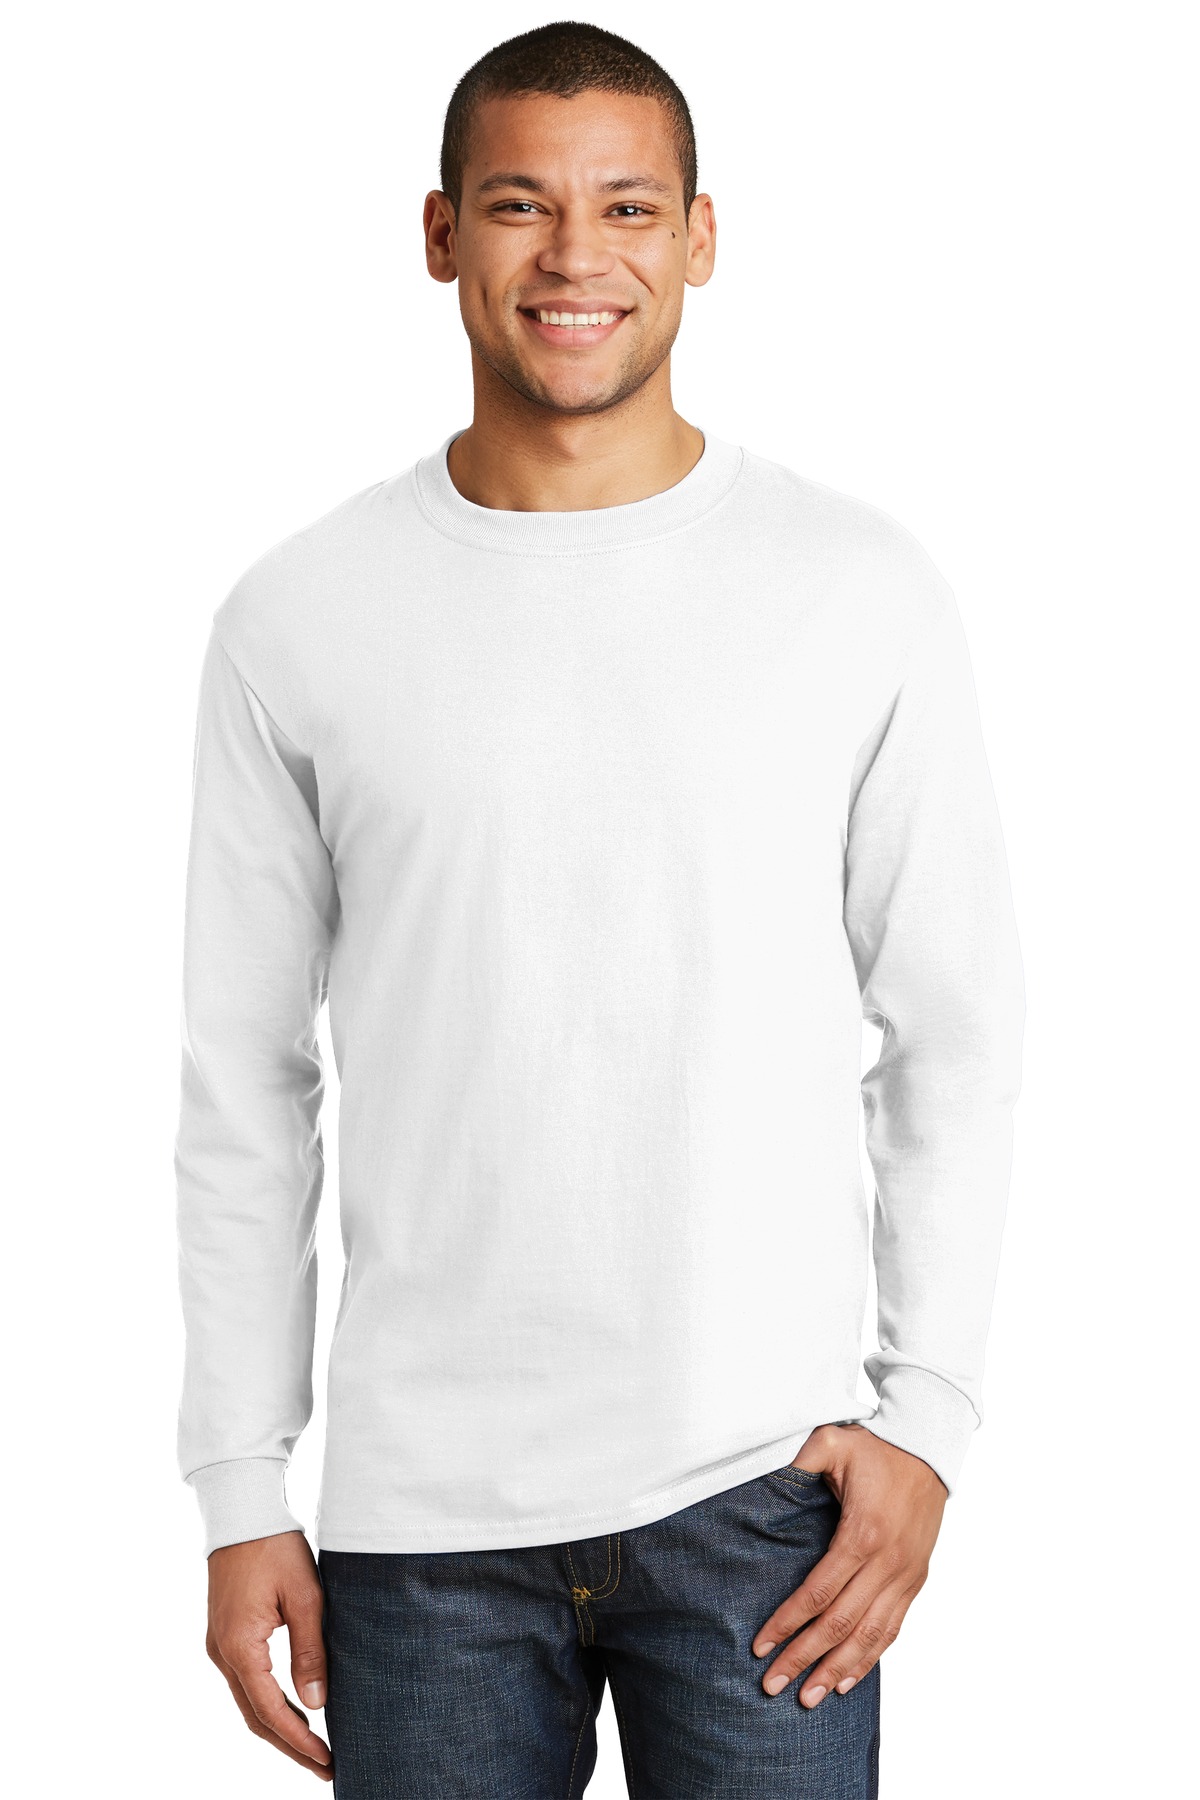 Hanes Beefy-T - 100% Cotton Long Sleeve T-Shirt-Hanes